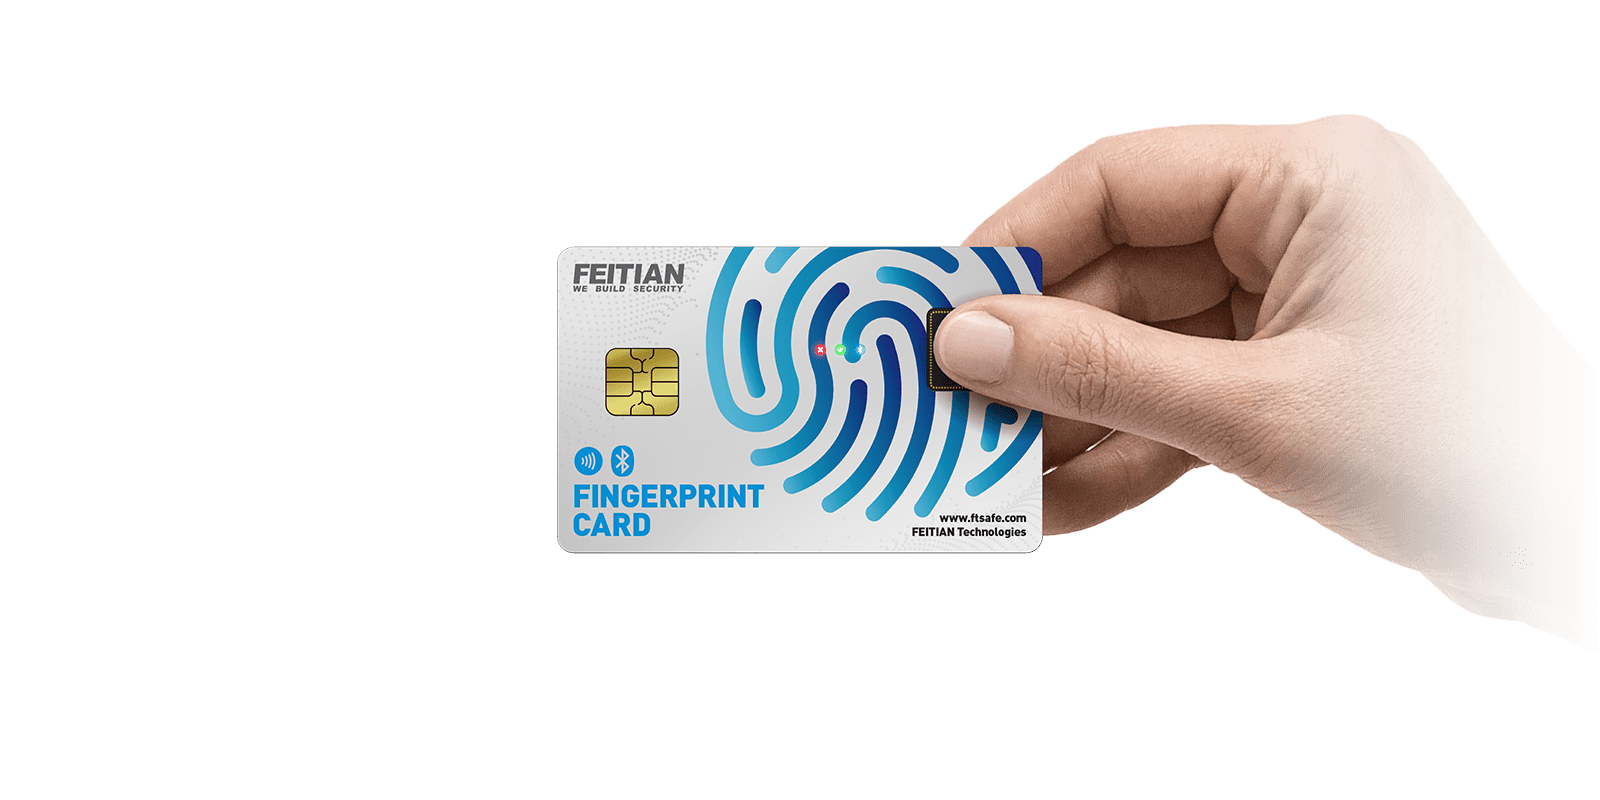 Fingerprint FIDO Card